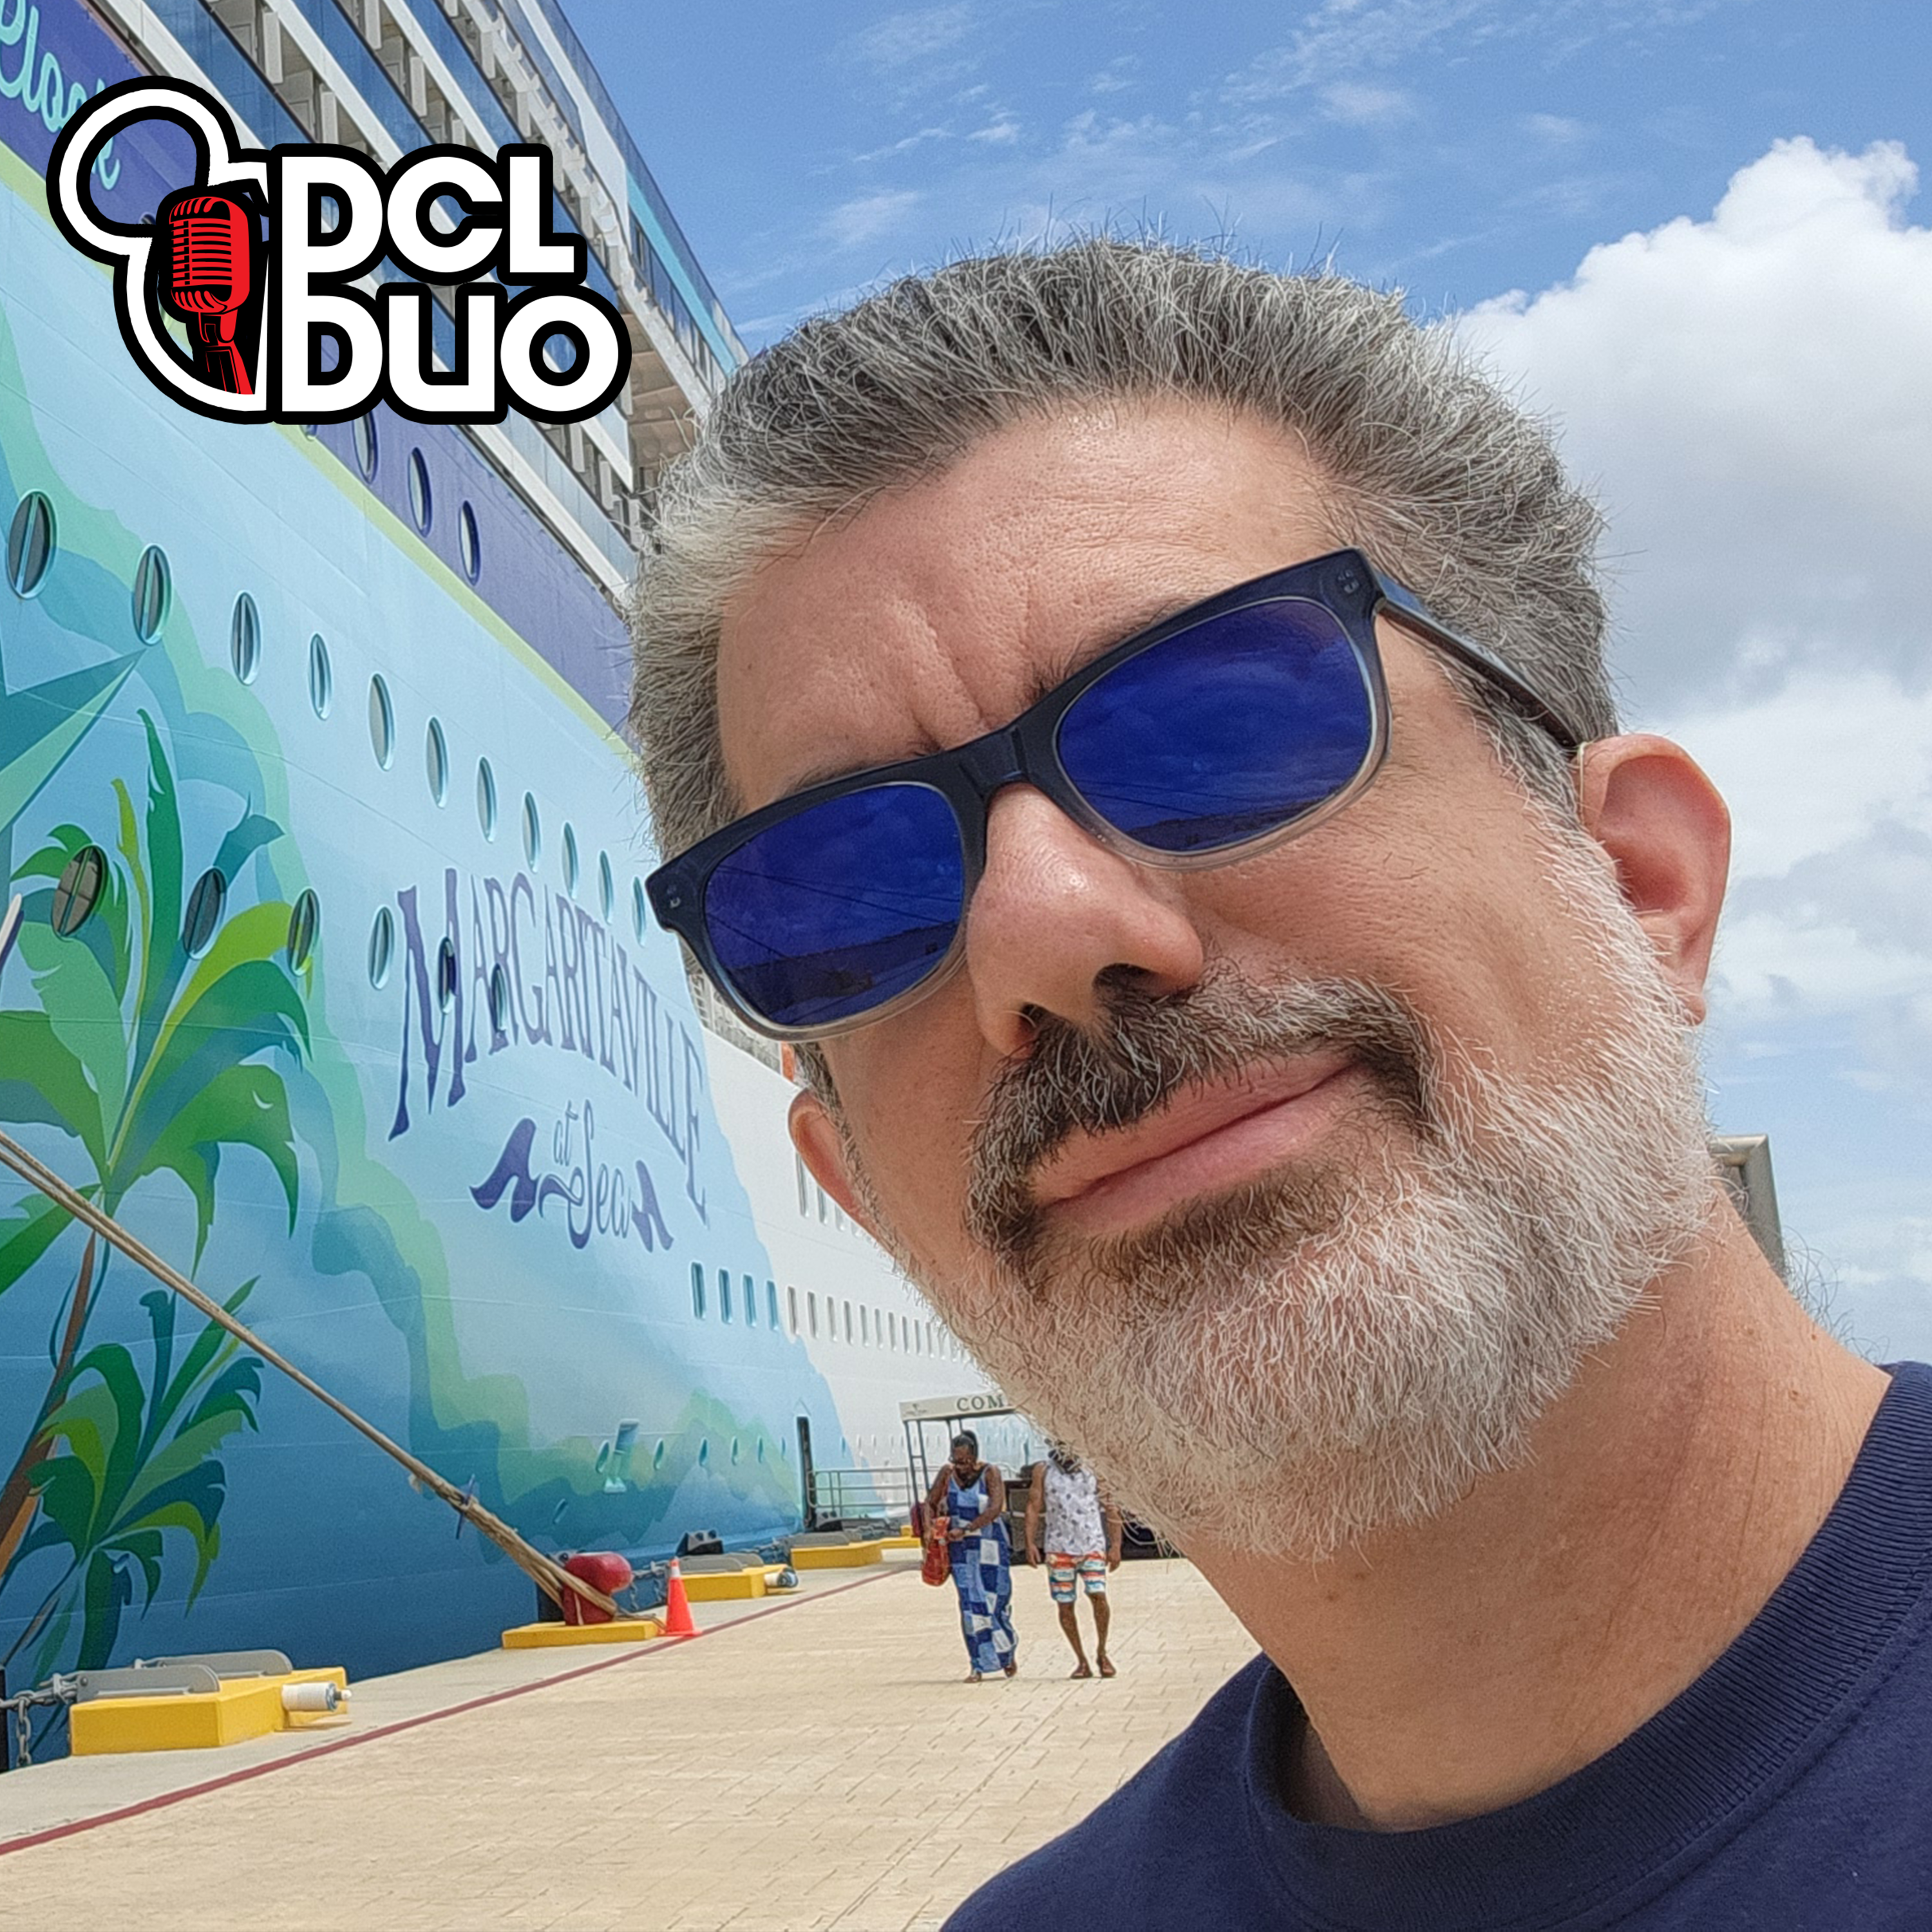 Ep. 438 - Live Bonus Show - Audio Mixology: Disney Cruise Line News, Margaritaville at Sea and Virgin Voyages